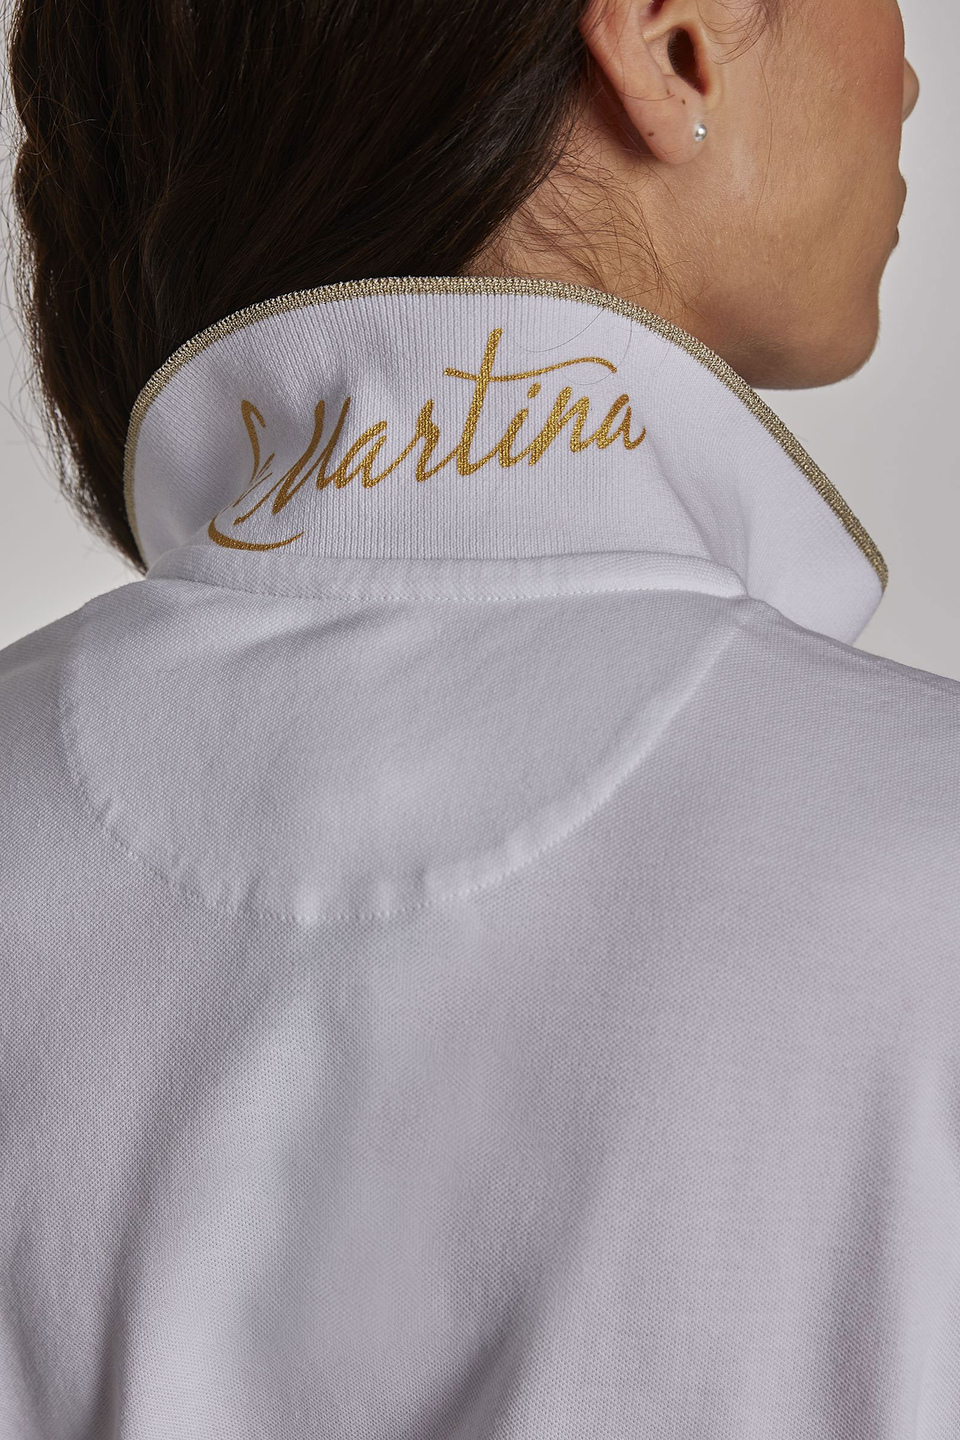 Women's short-sleeved regular-fit cotton dress - La Martina - Official Online Shop